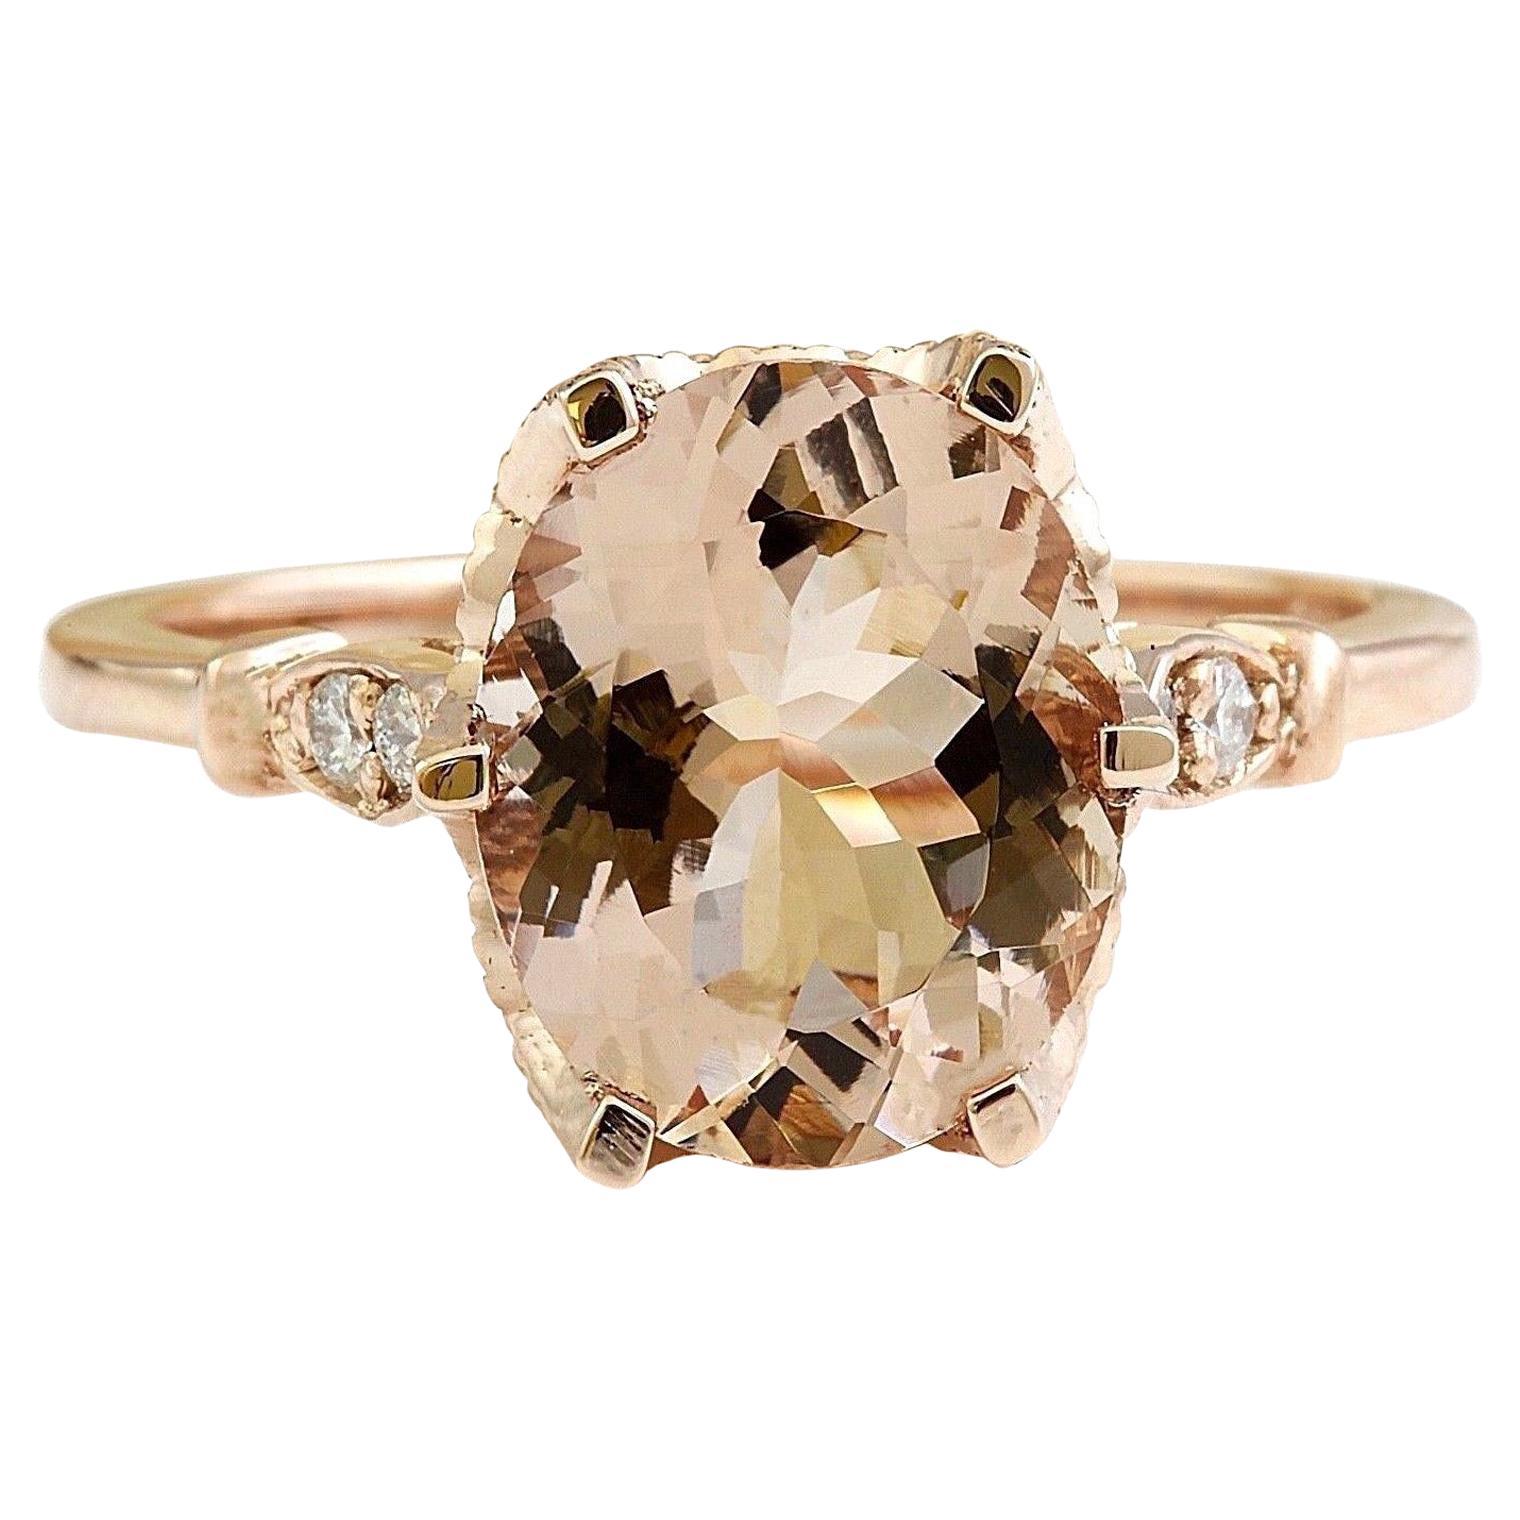 Exquisite Natural Morganite Diamond Ring In 14 Karat Solid Rose Gold 